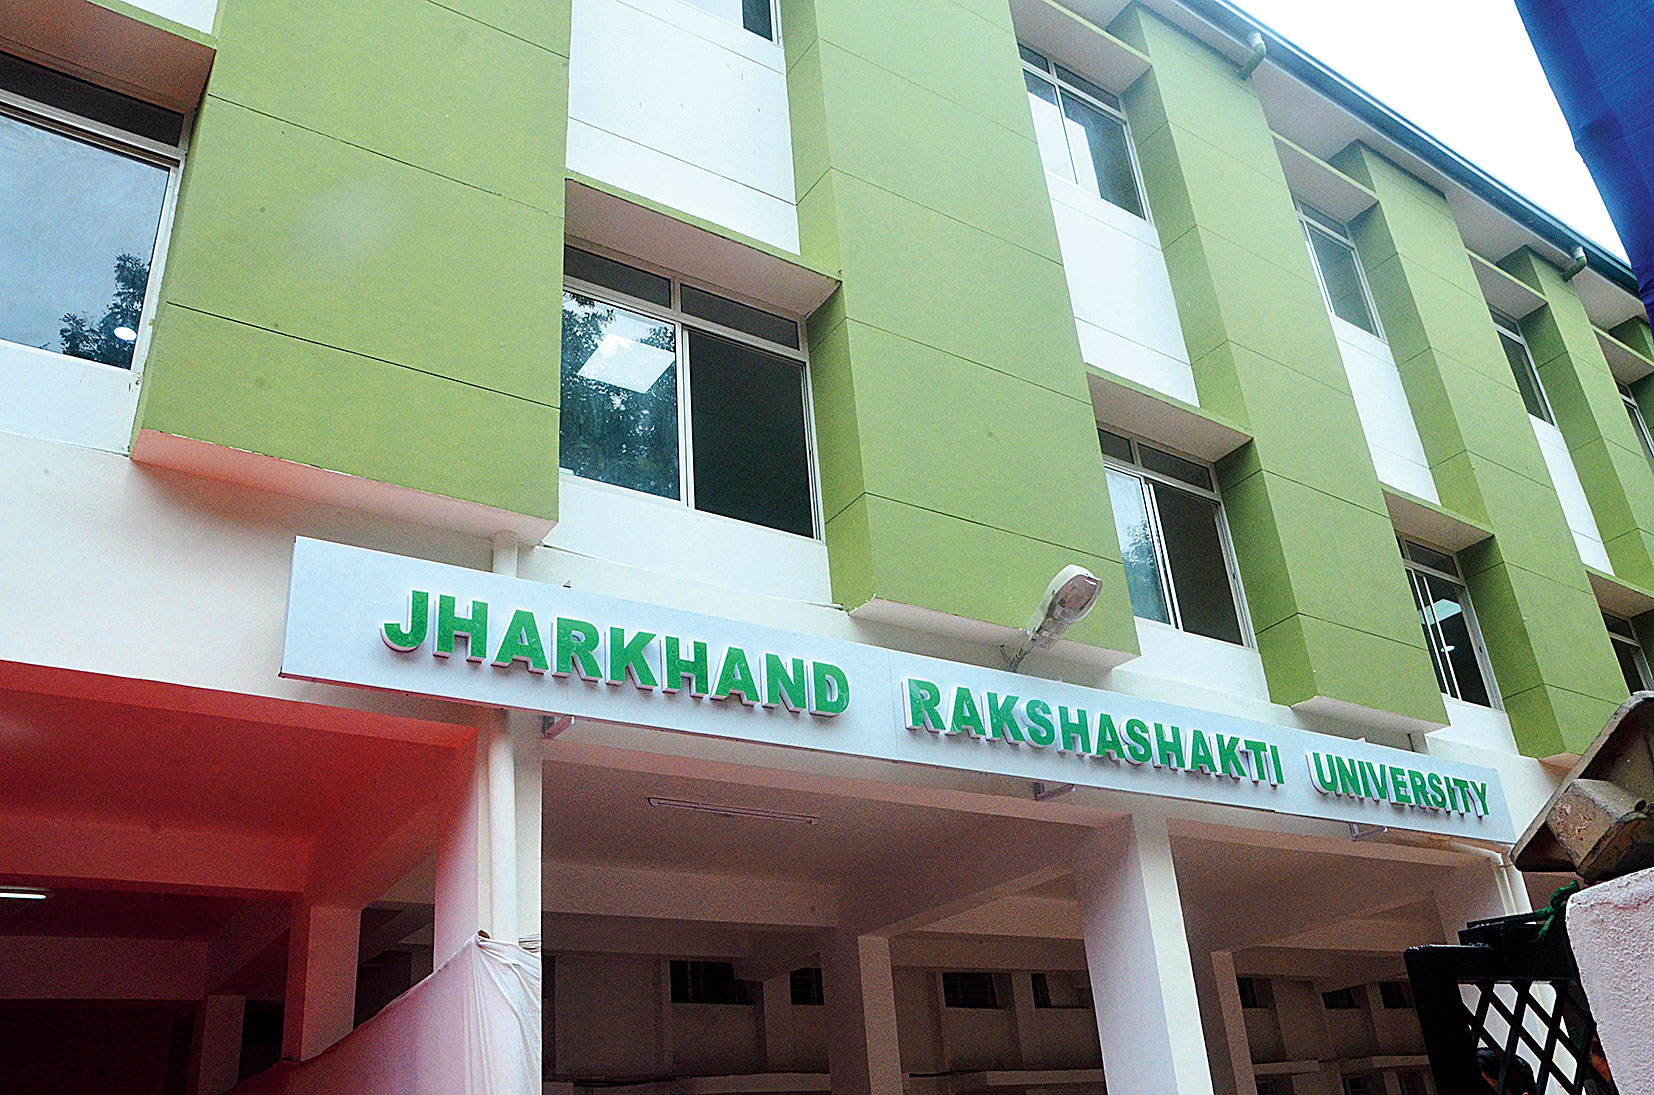 Jharkhand Rakshashakti University